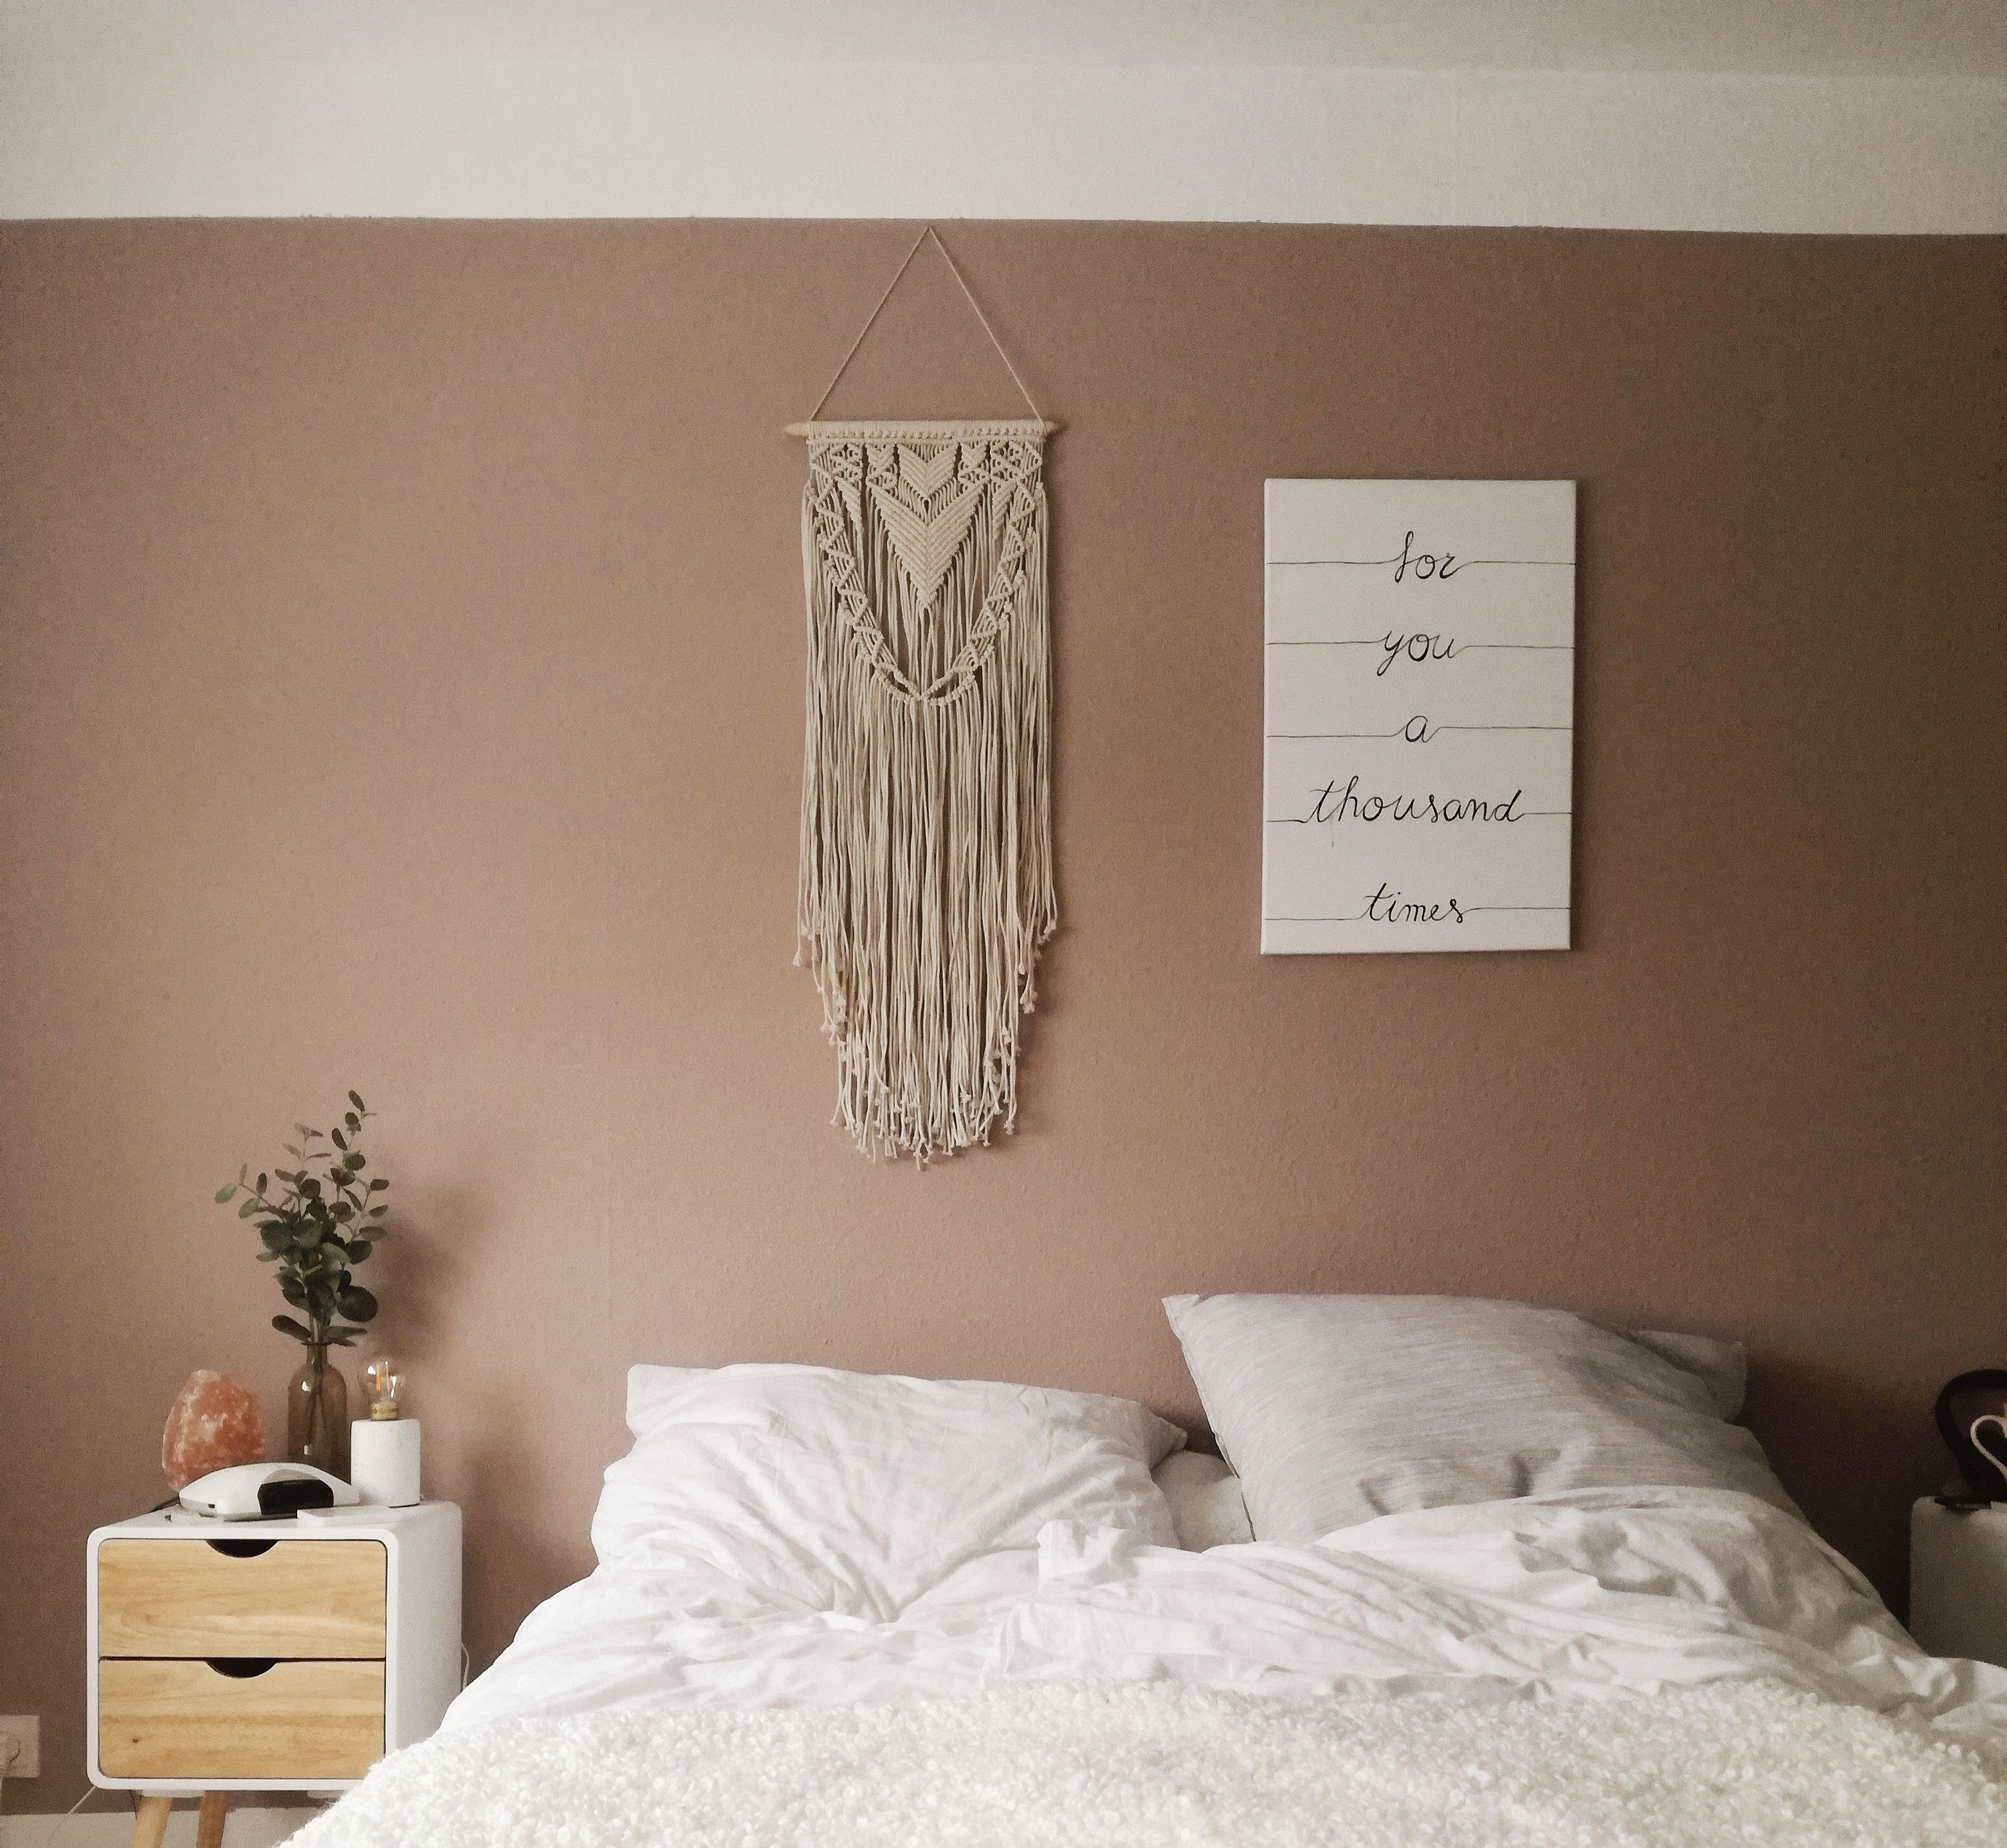 Unser Schlafzimmer #skandinavian #colour #couch #bedroom #couchliebt